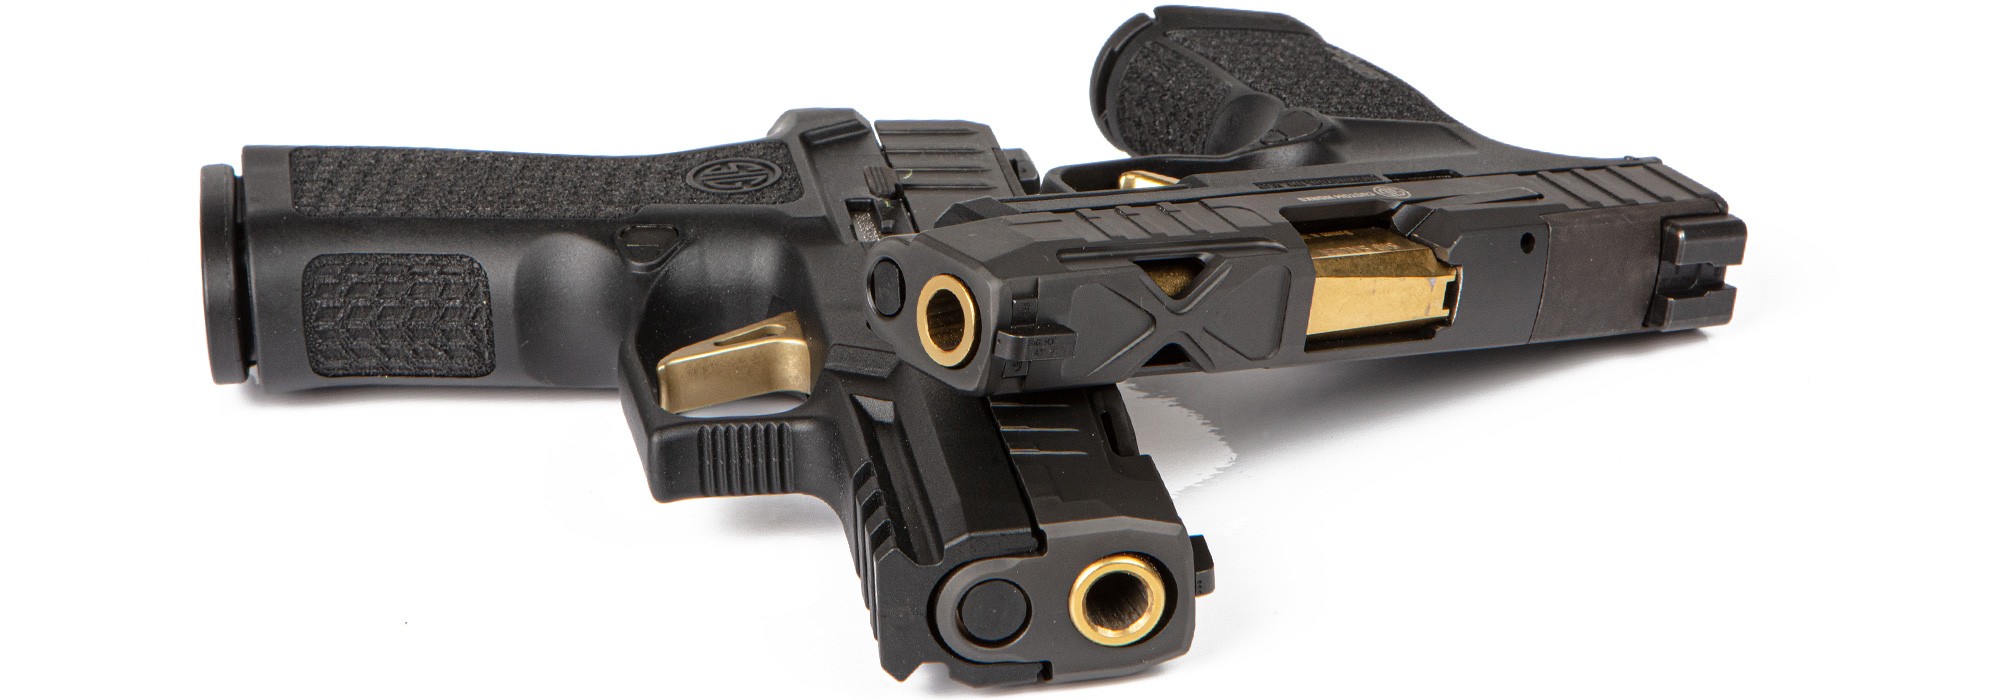 Sig Sauer P365XL Spectre Comp Semi-Automatic Pistol In Stock Now | Don't Miss Out! | tacticalfirearmsandarchery.com